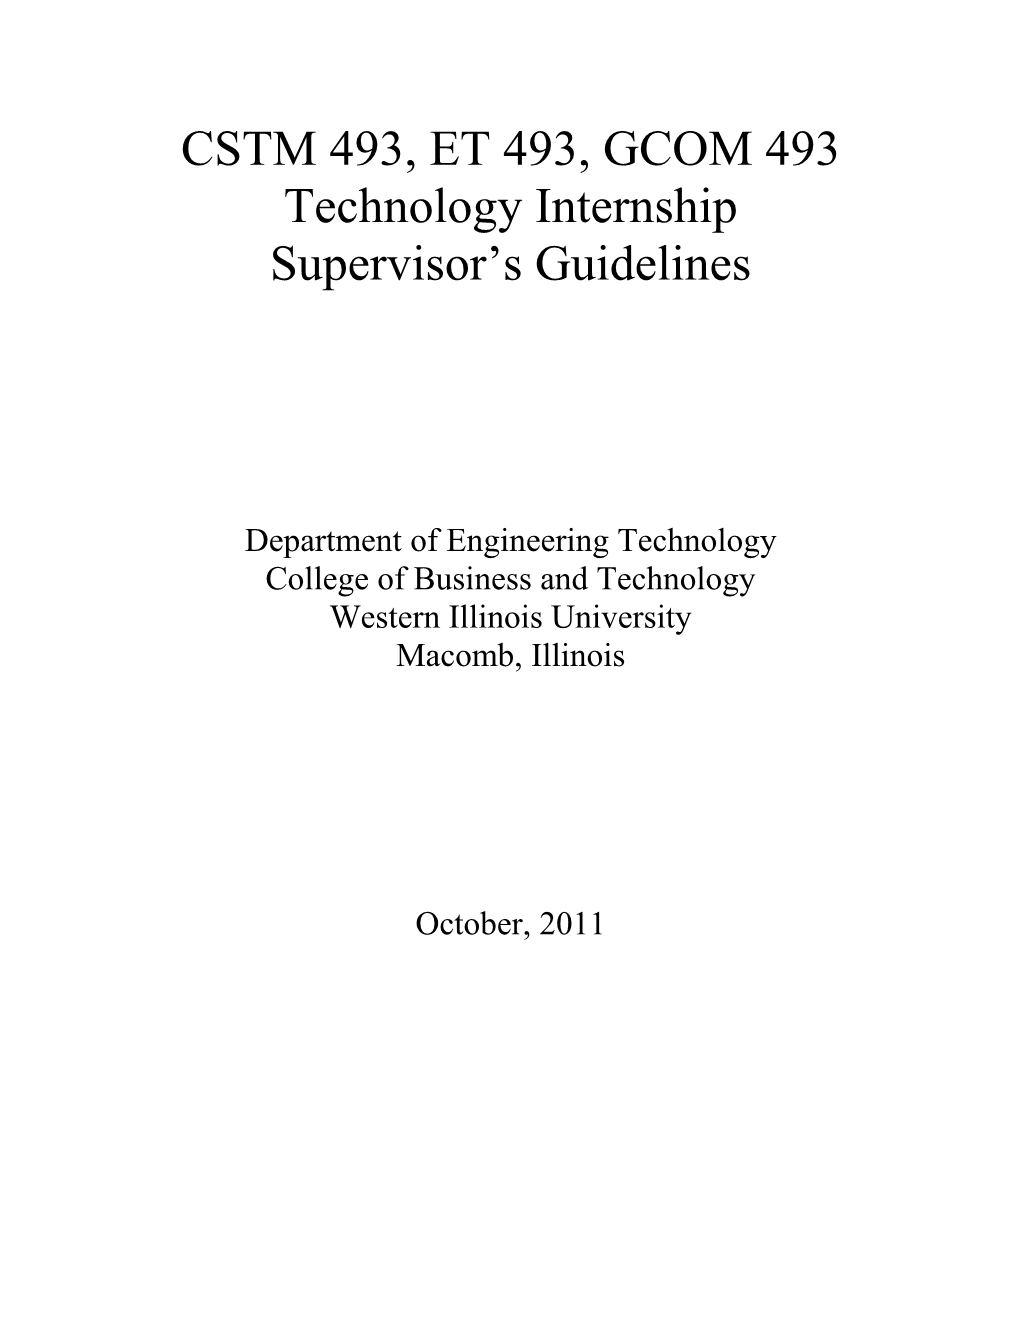 CSTM 493, ET 493, GCOM 493 Technology Internship